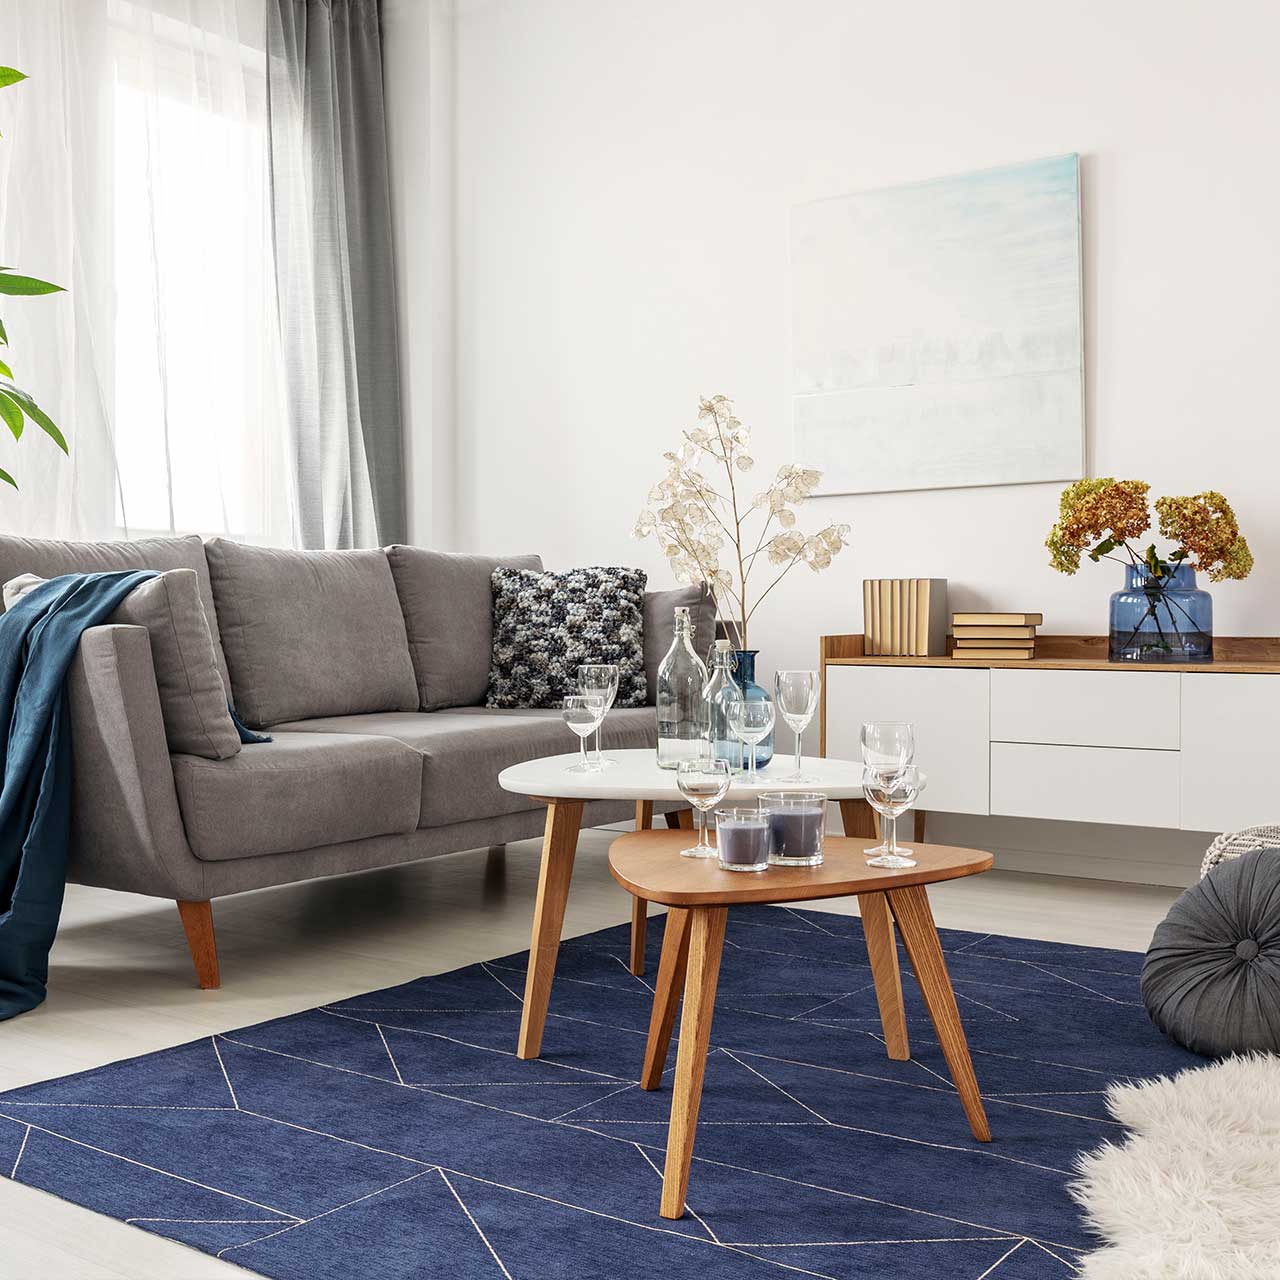 Living room interior decor with blue rug